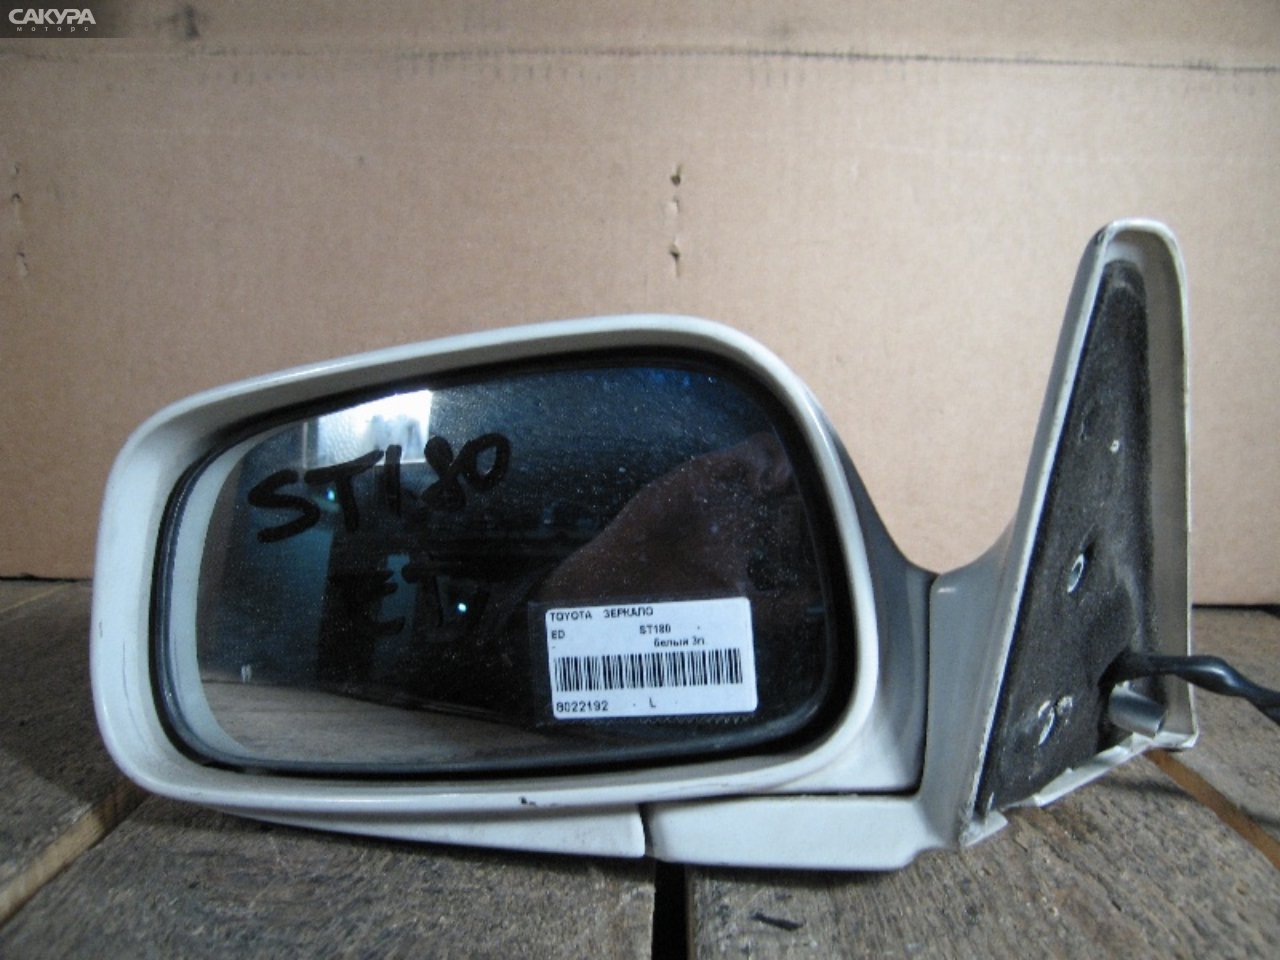 Зеркало боковое левое Toyota Carina ED ST180: купить в Сакура Абакан.